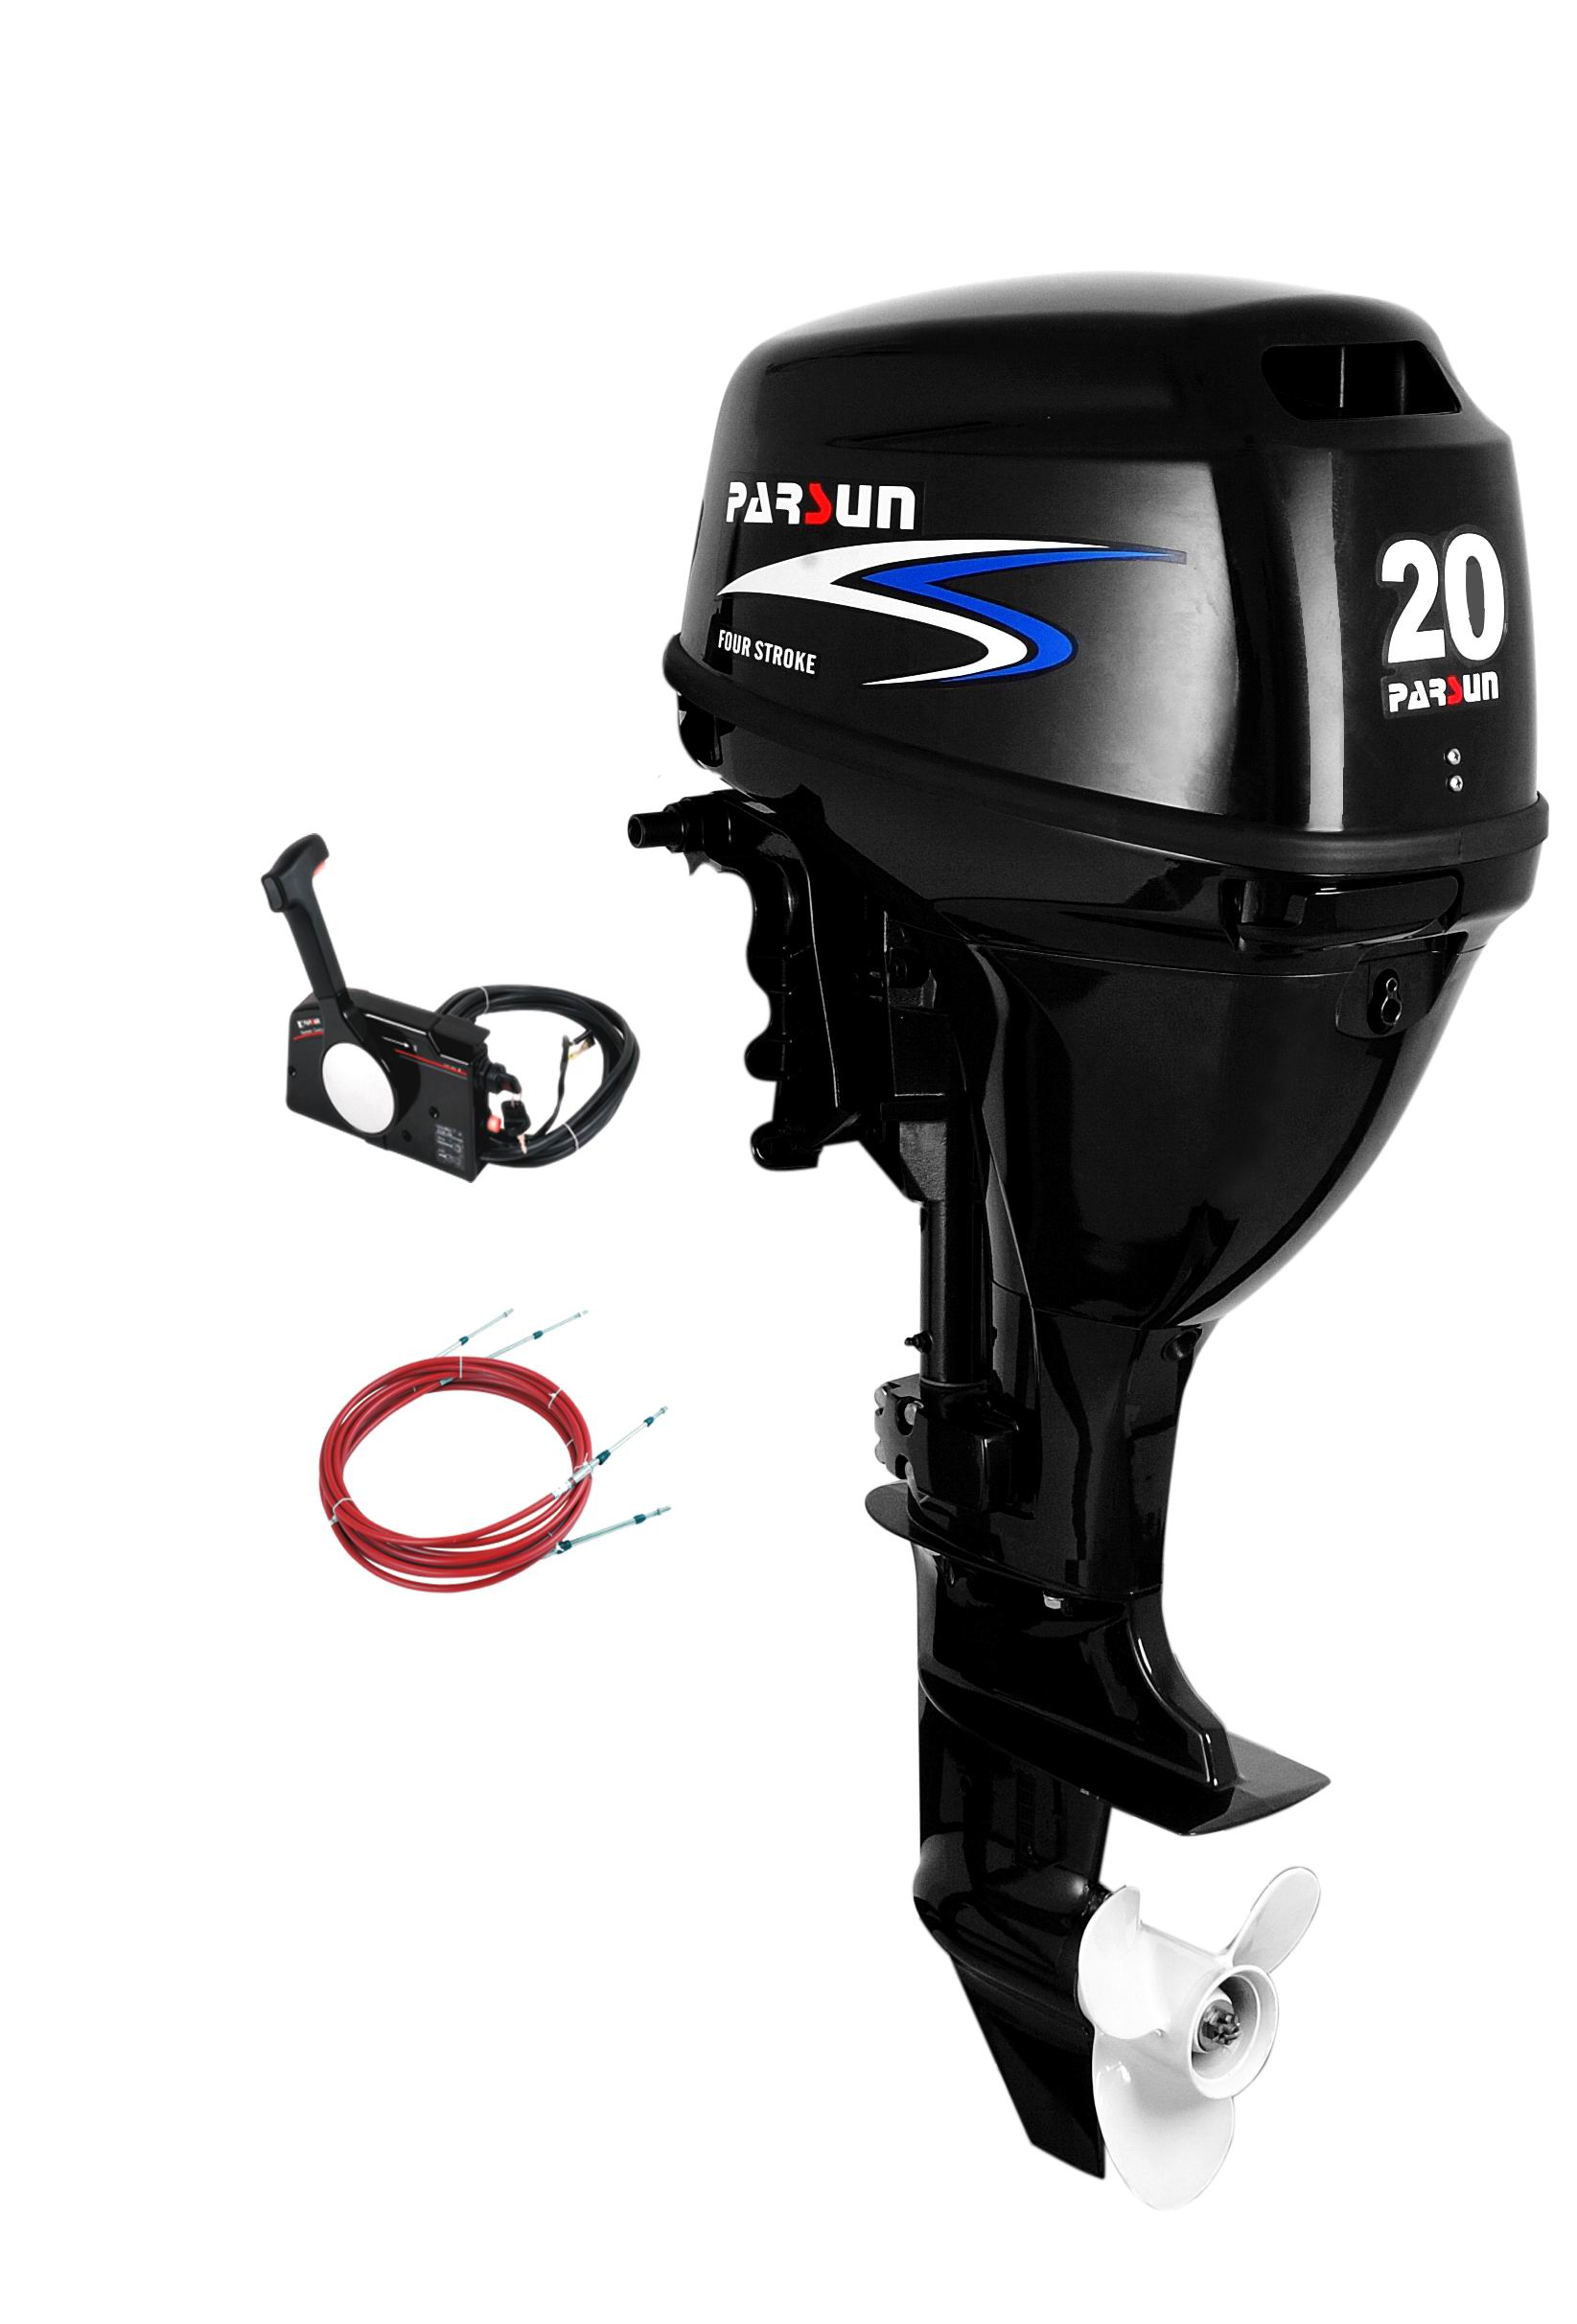 F20 Highpower Outboard Motor